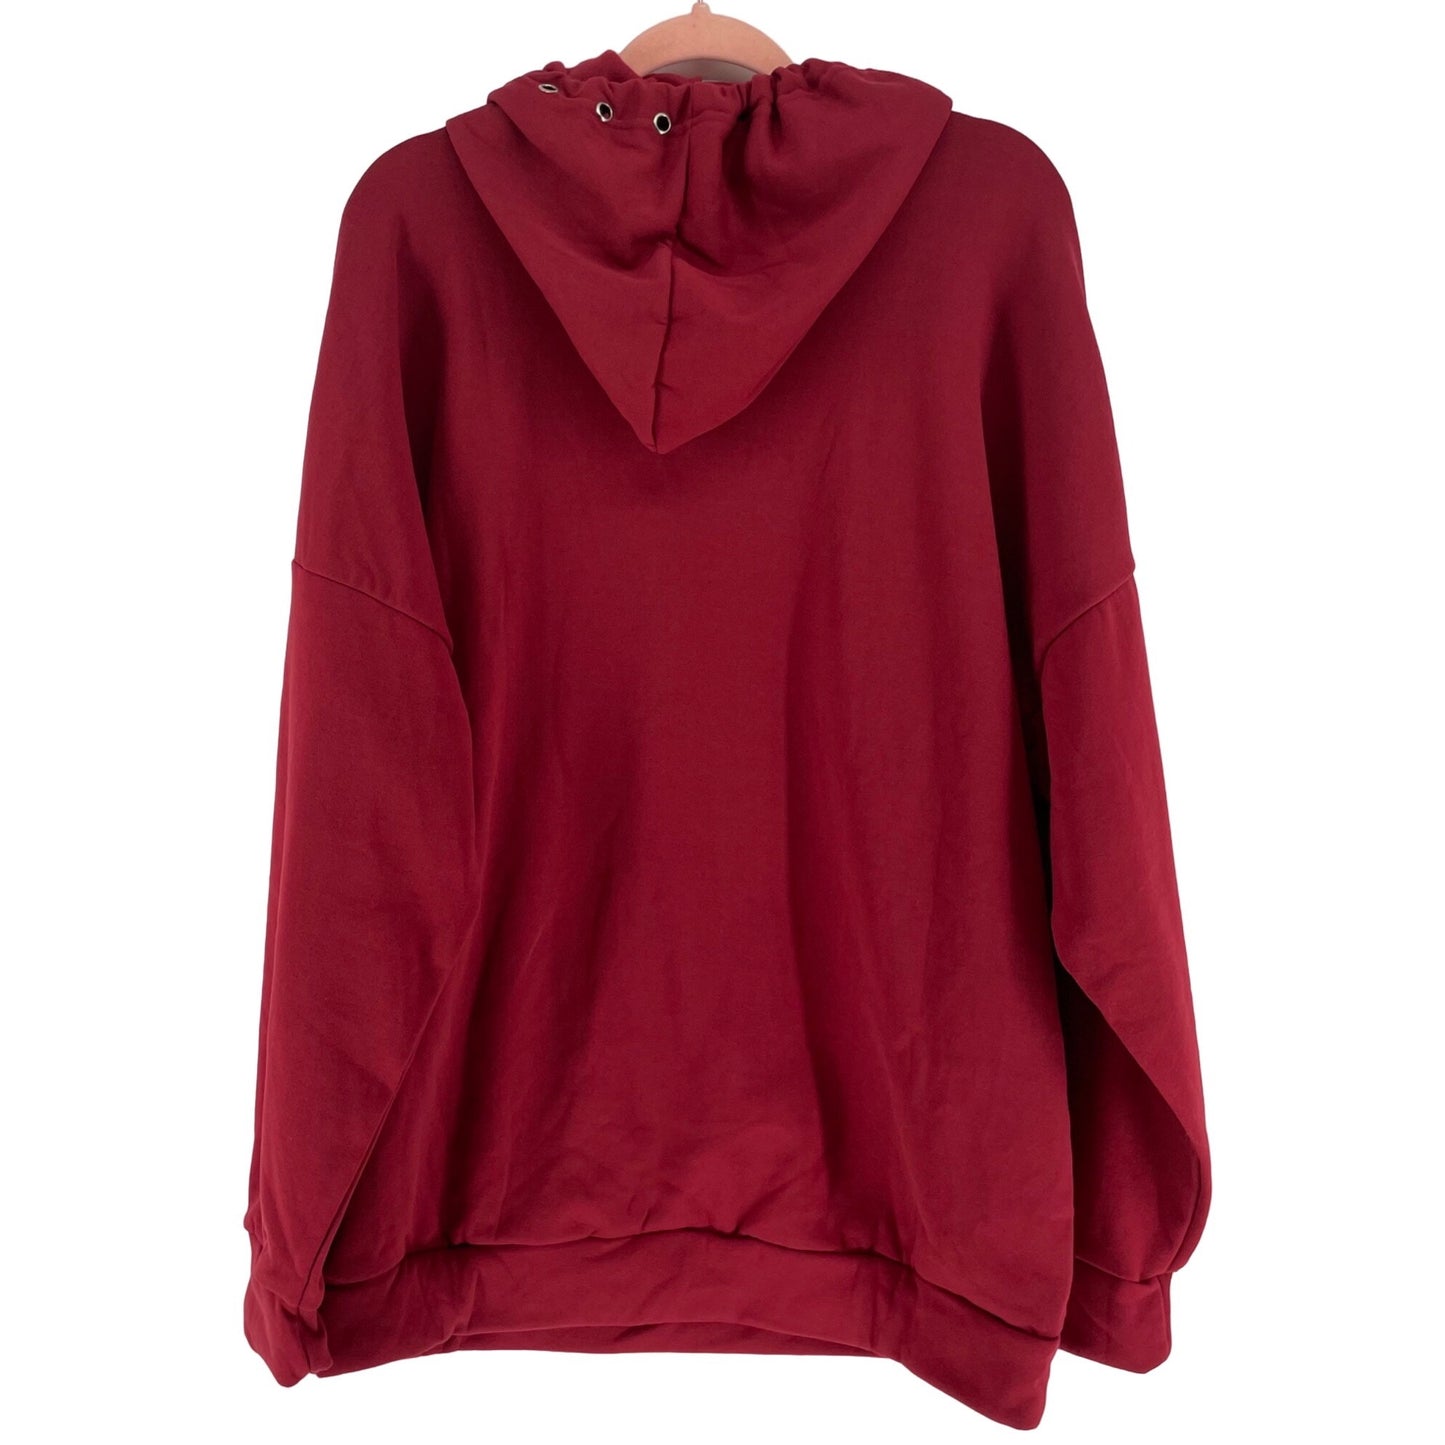 NWT Qingduomao Women's Size XXL Burgundy/Maroon Drawstring Hoodie Sweatshirt